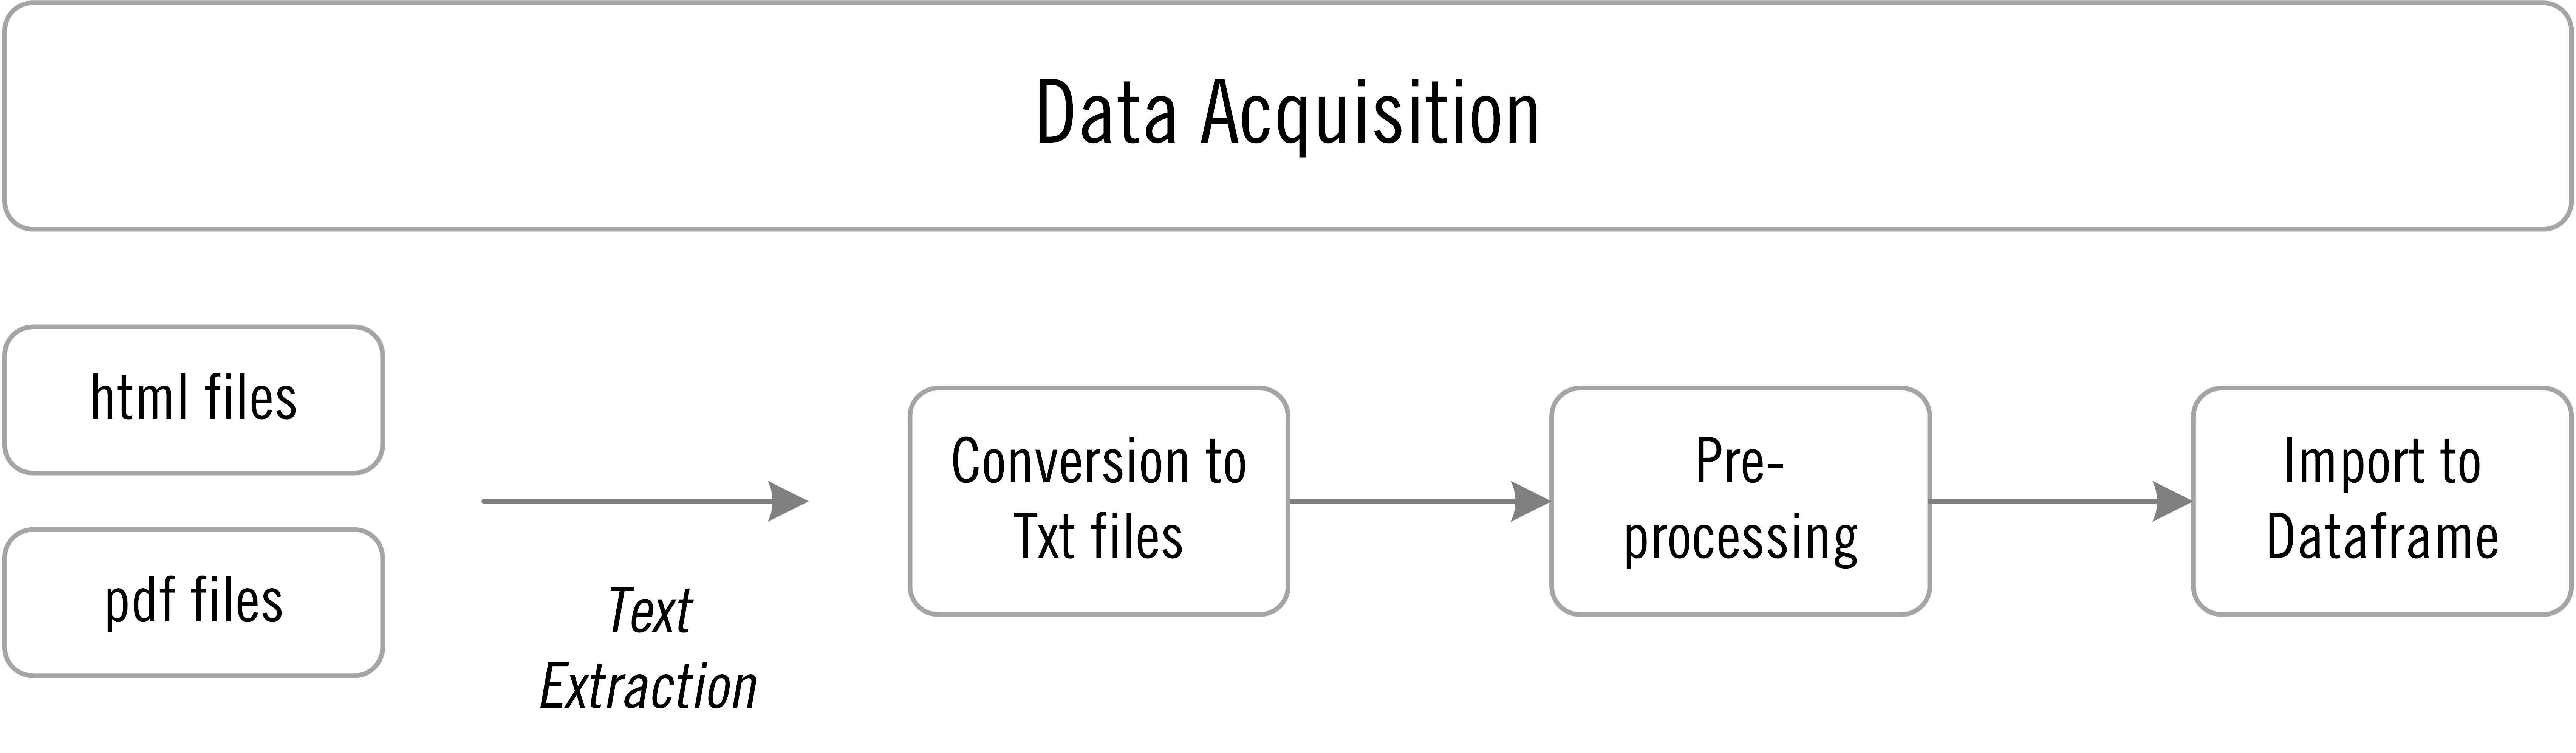 Data Acquisition Roadmap